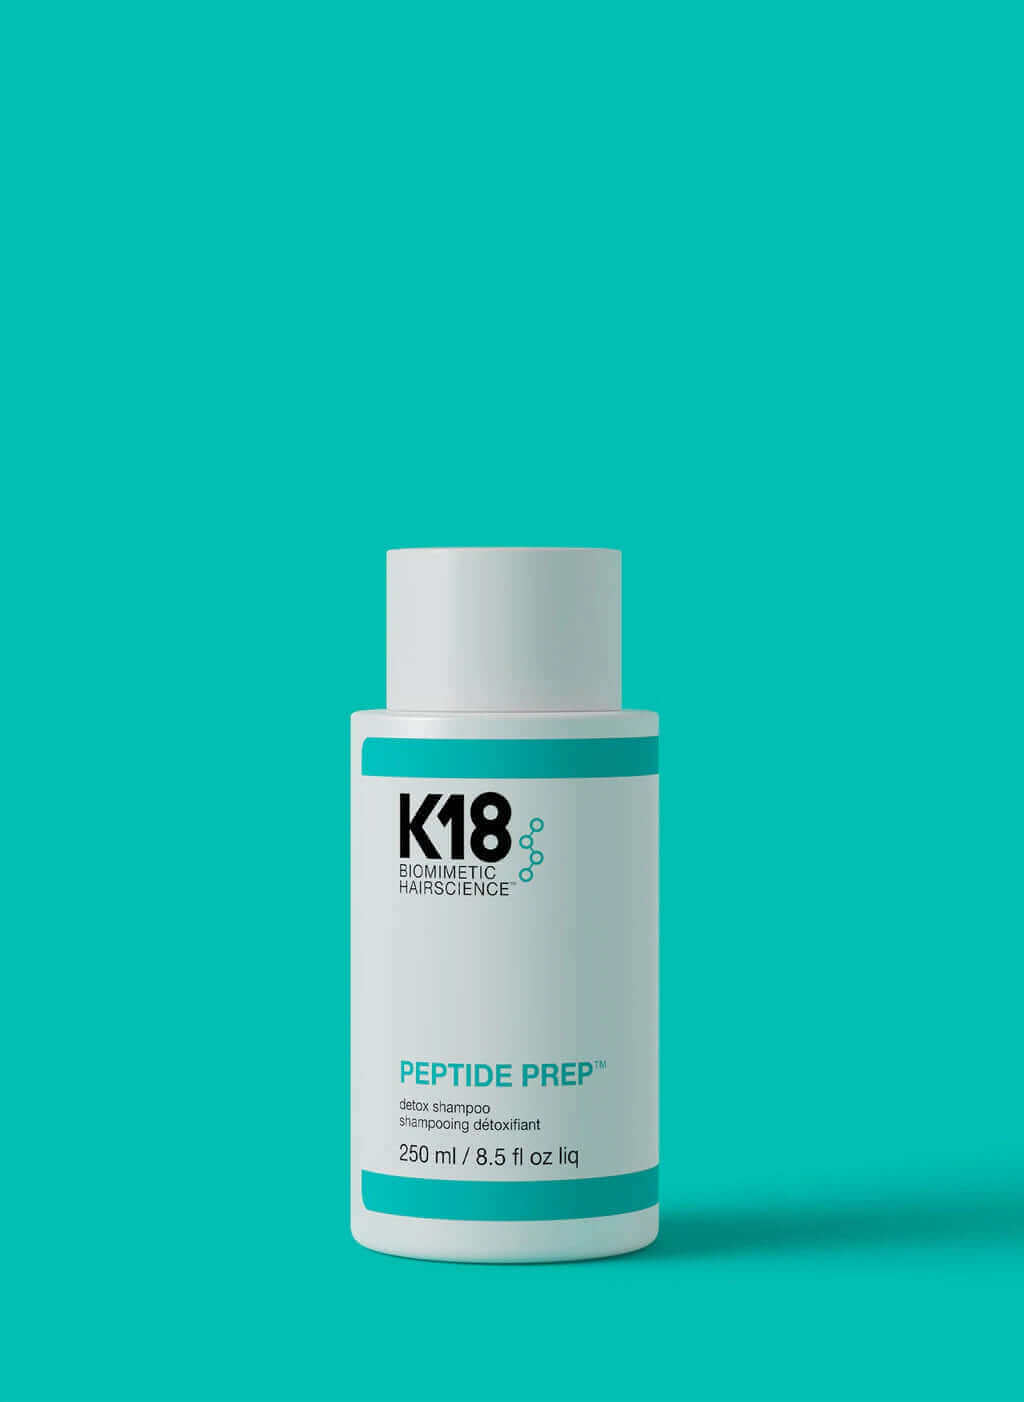 A K18 Hair Repair Detox Shampoo bottle on a turquoise surface.